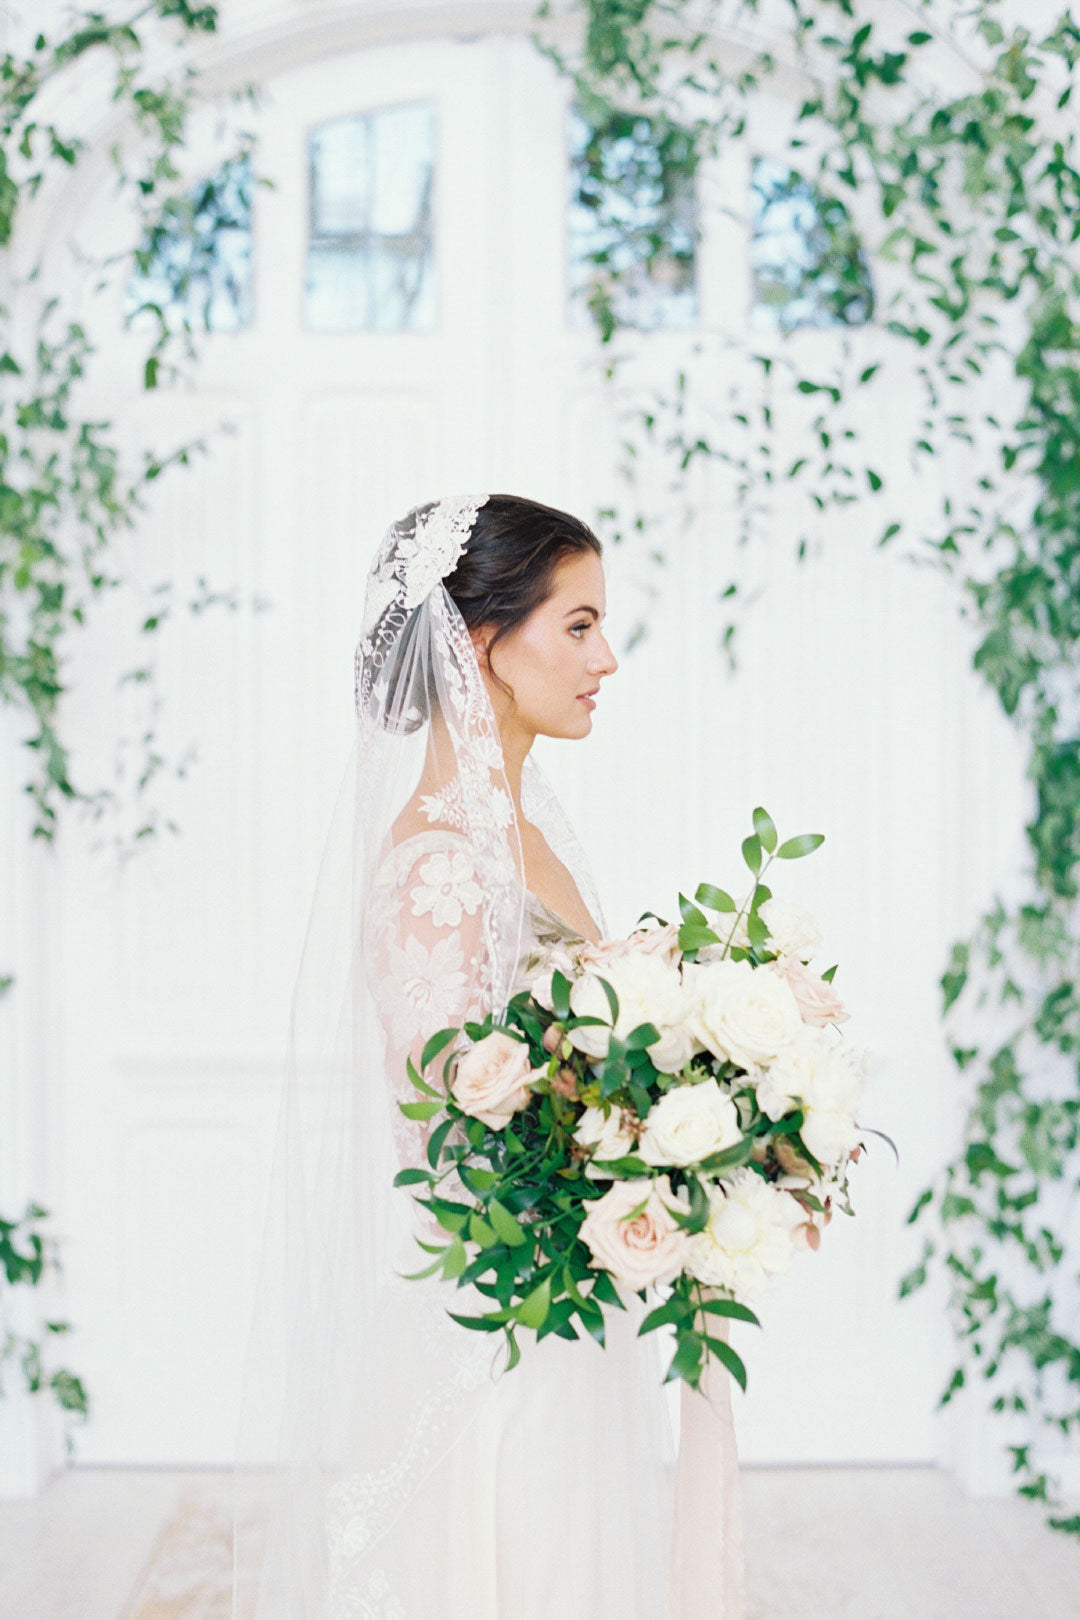 Profile of Bride in wedding veil holding wedding bouquet